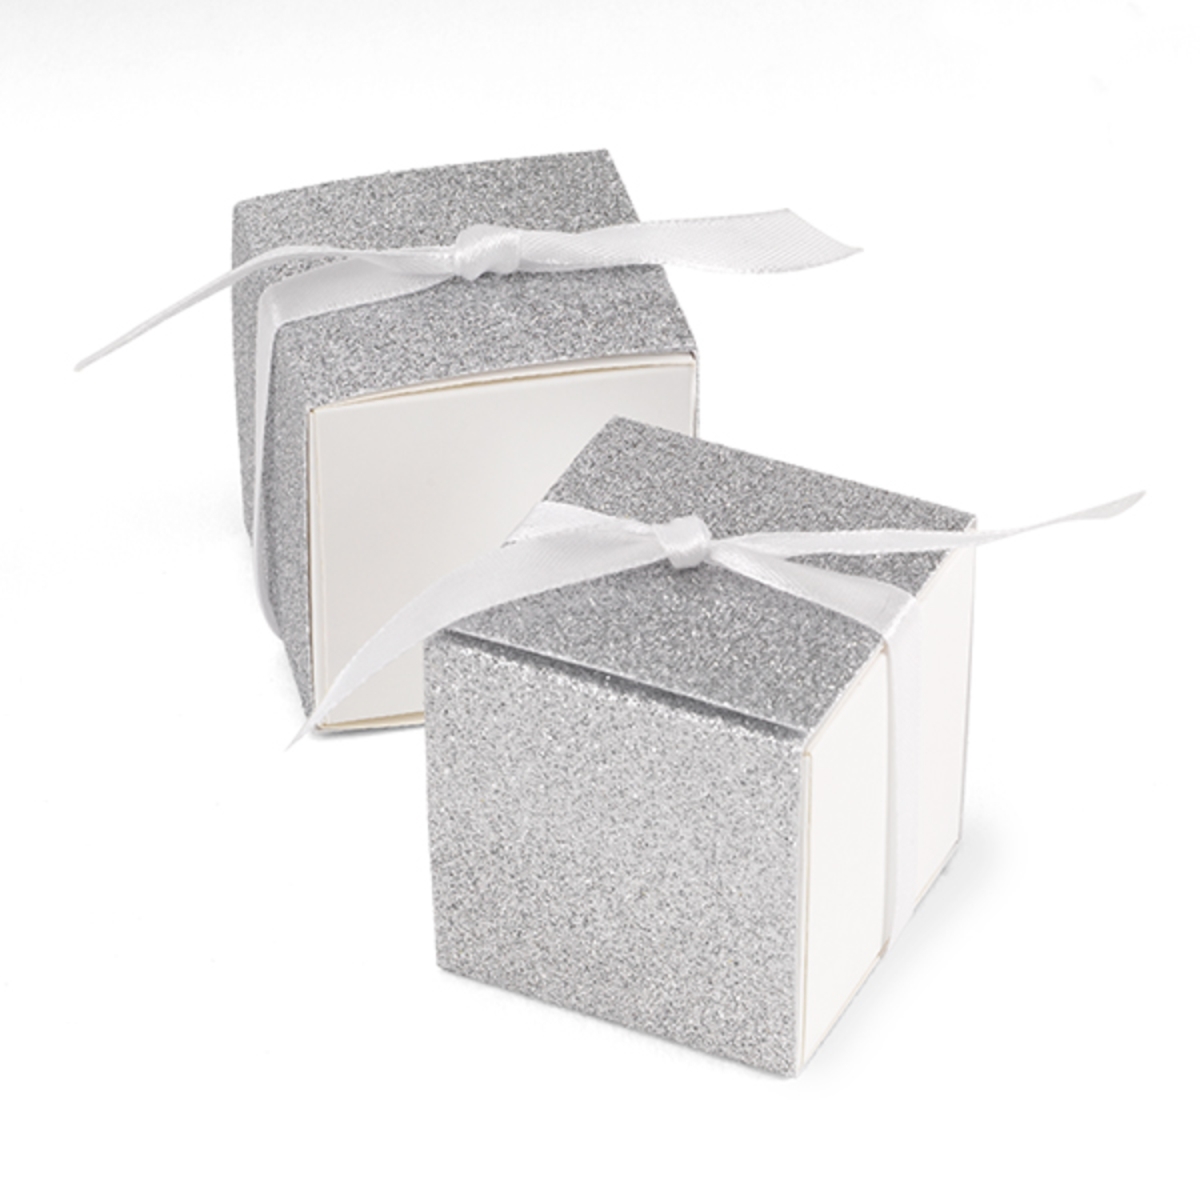 Picture of Hortense B. Hewitt 39322 Glitter Wrap Favor Box - Silver - Pack of 25